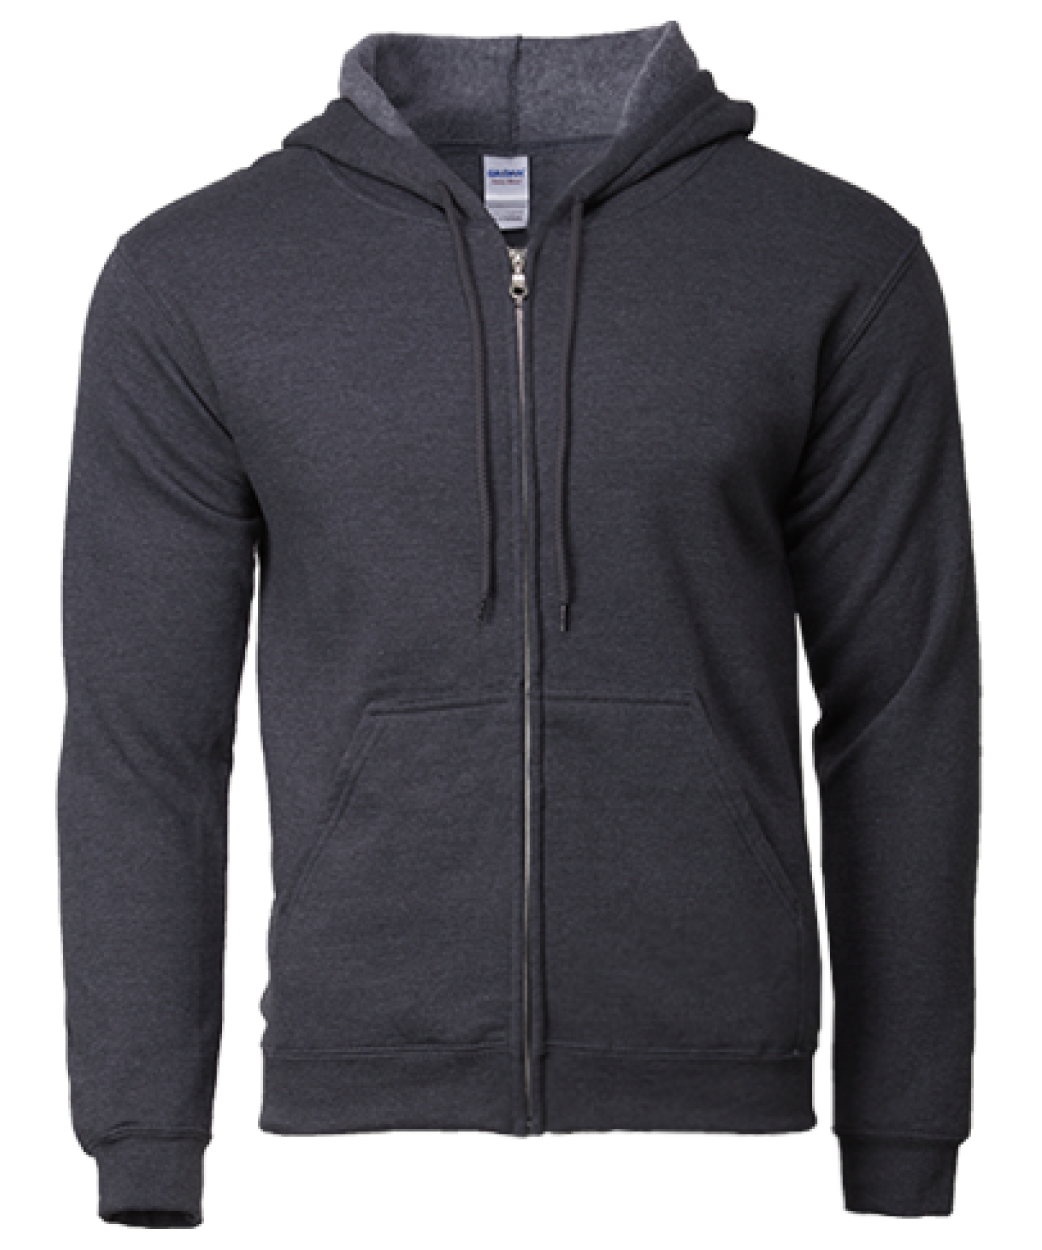 Gildan Heavy Blend 88600 285GSM Adult Unisex Full Zip Hooded Sweatshirt Pouch Pocket Poly-cotton Hoodies Jacket Group B BLACK/NAVY/SPORT GREY/DARK HEATHER 88600